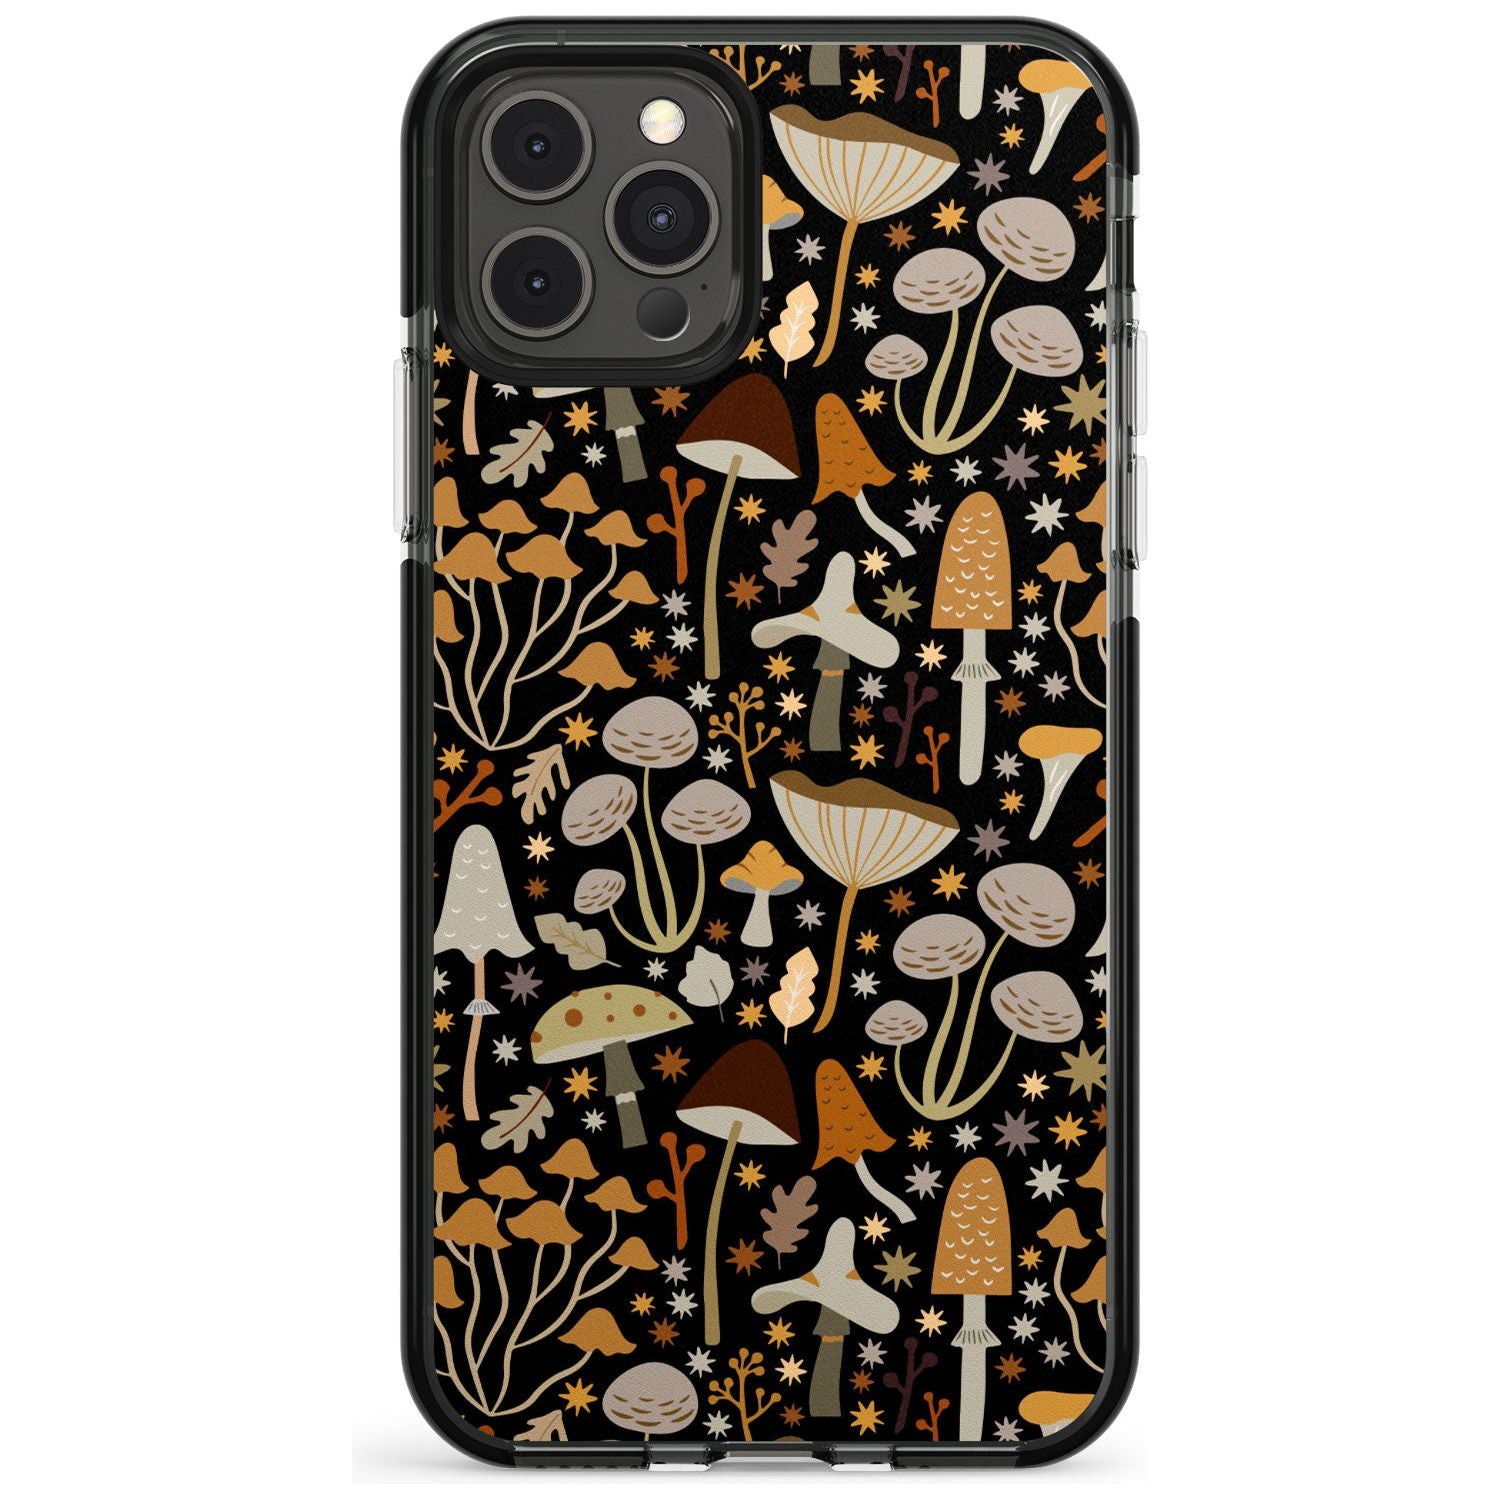 Sentimental Mushrooms Pattern Black Impact Phone Case for iPhone 11